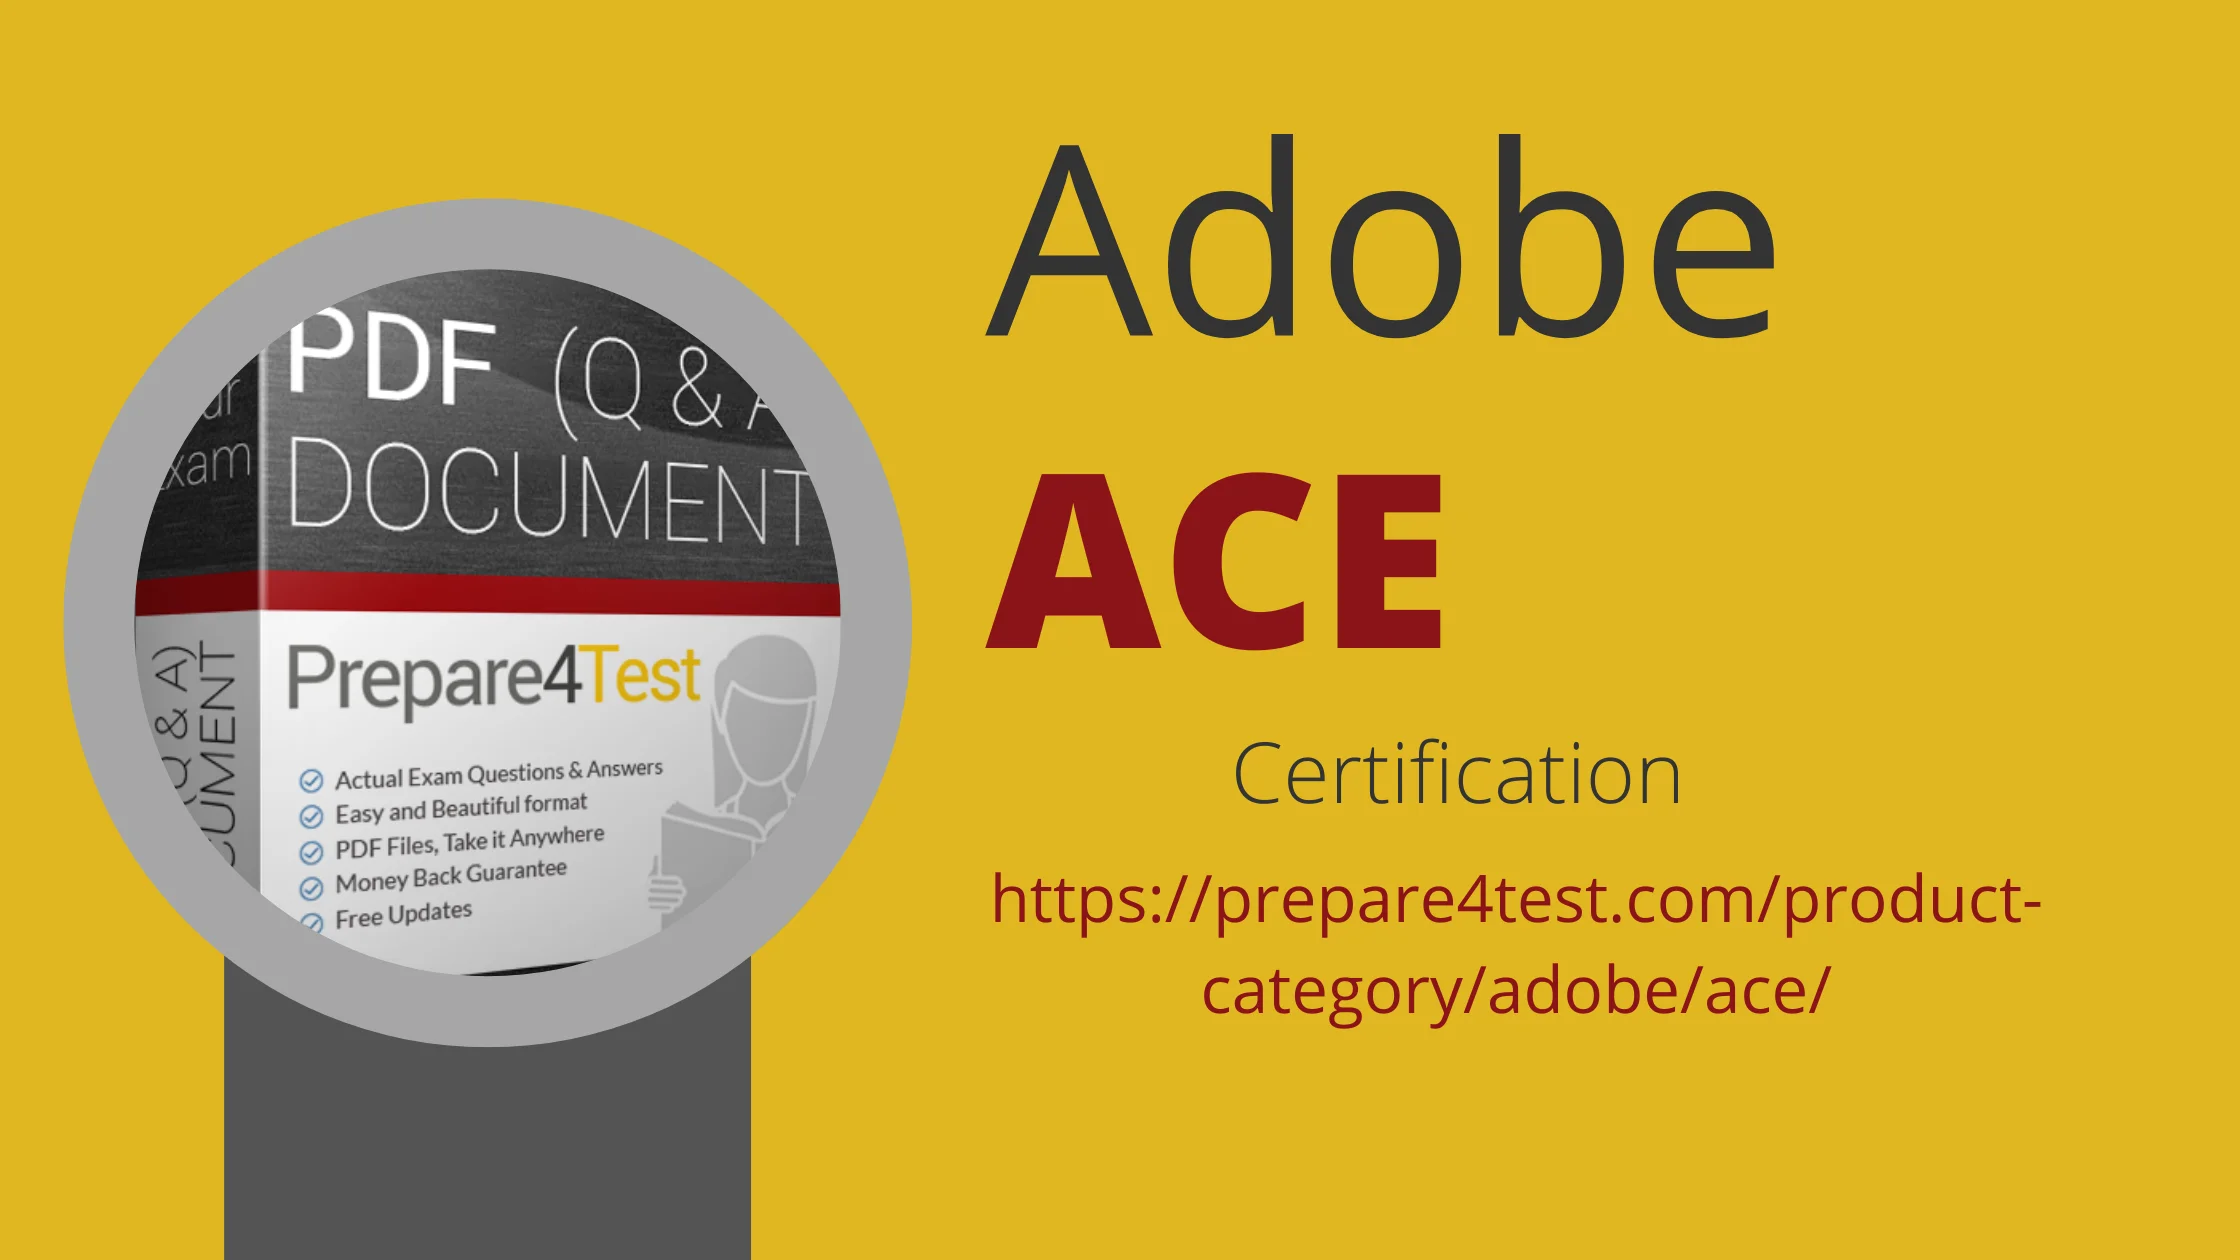 Adobe ACE Certification